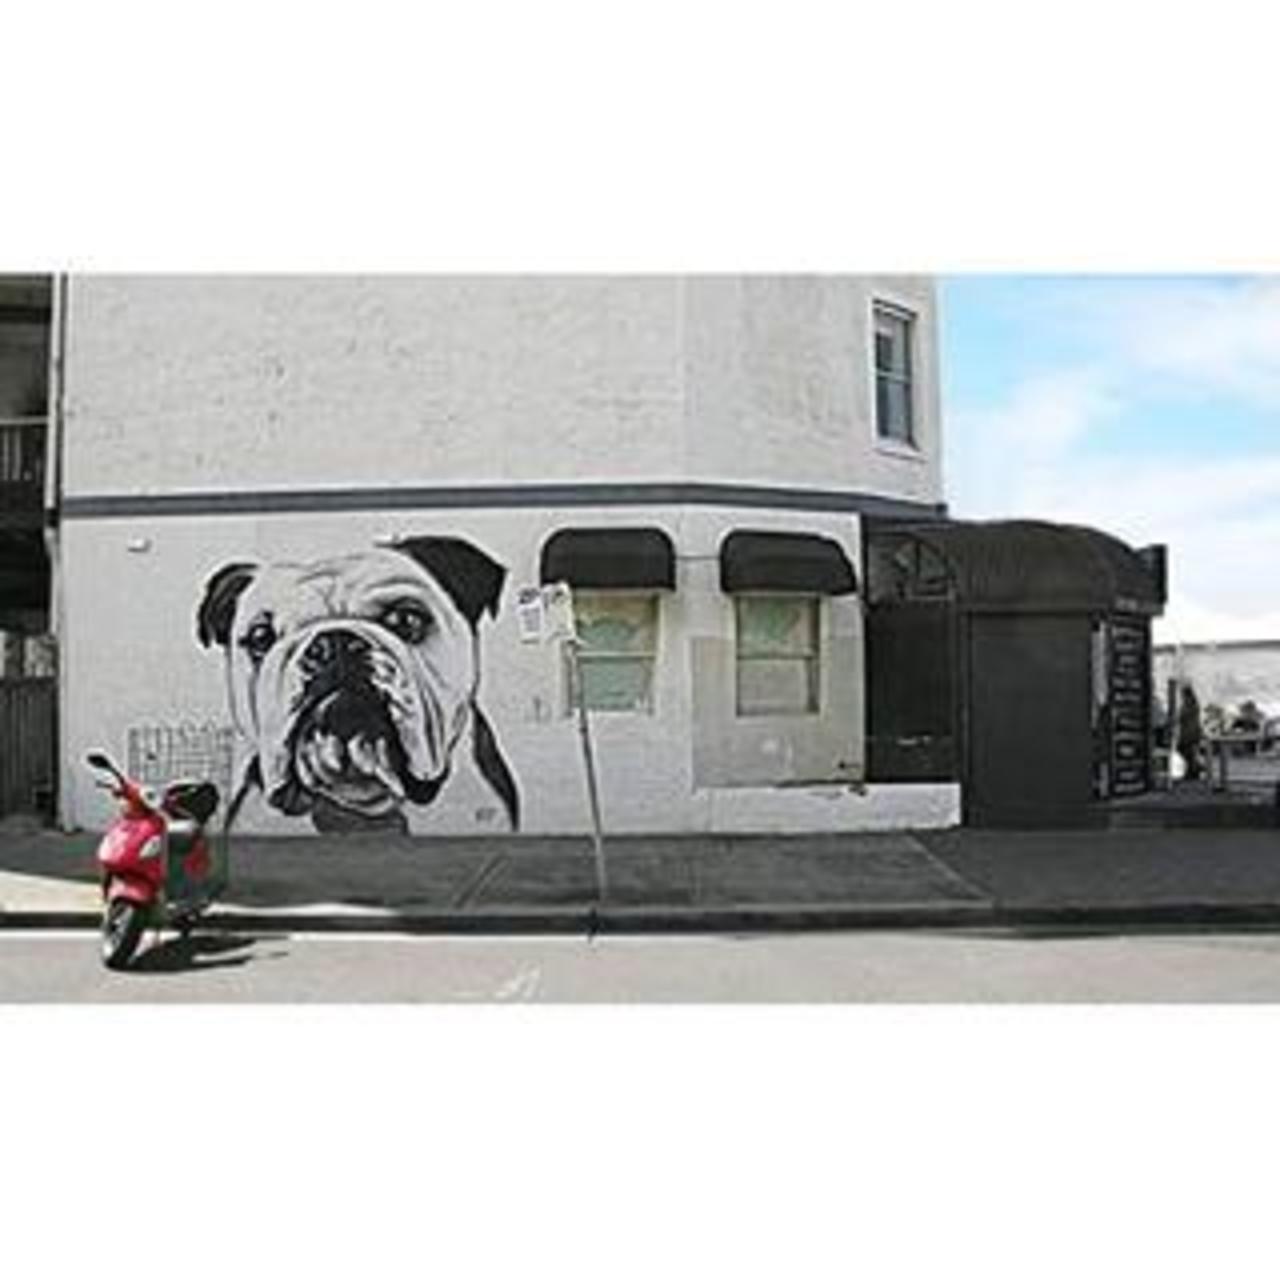 RT @PugPug_Love: Pug graffiti #street #streetart #graffiti  #pug  #moped  #bondi  #sydney  #australlia http://www.findelight.net/puggie_detail.html?id=1083623757057467284_503696383 http://t.co/aglfKcBFK8